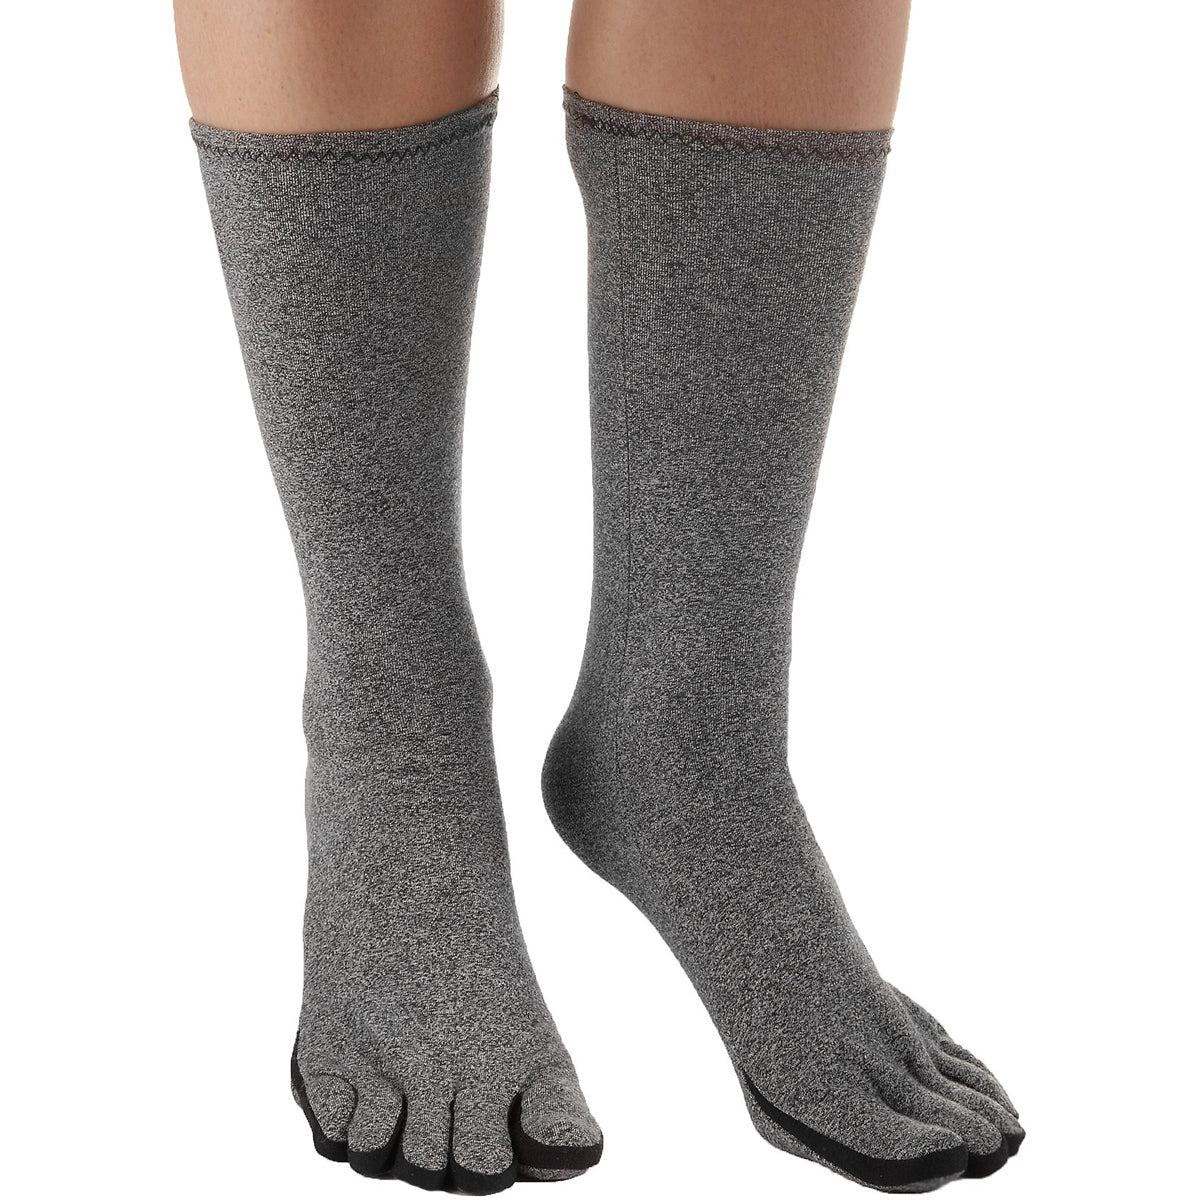 Brownmed IMAK Compression Arthritis Socks - Heather Gray IMAK